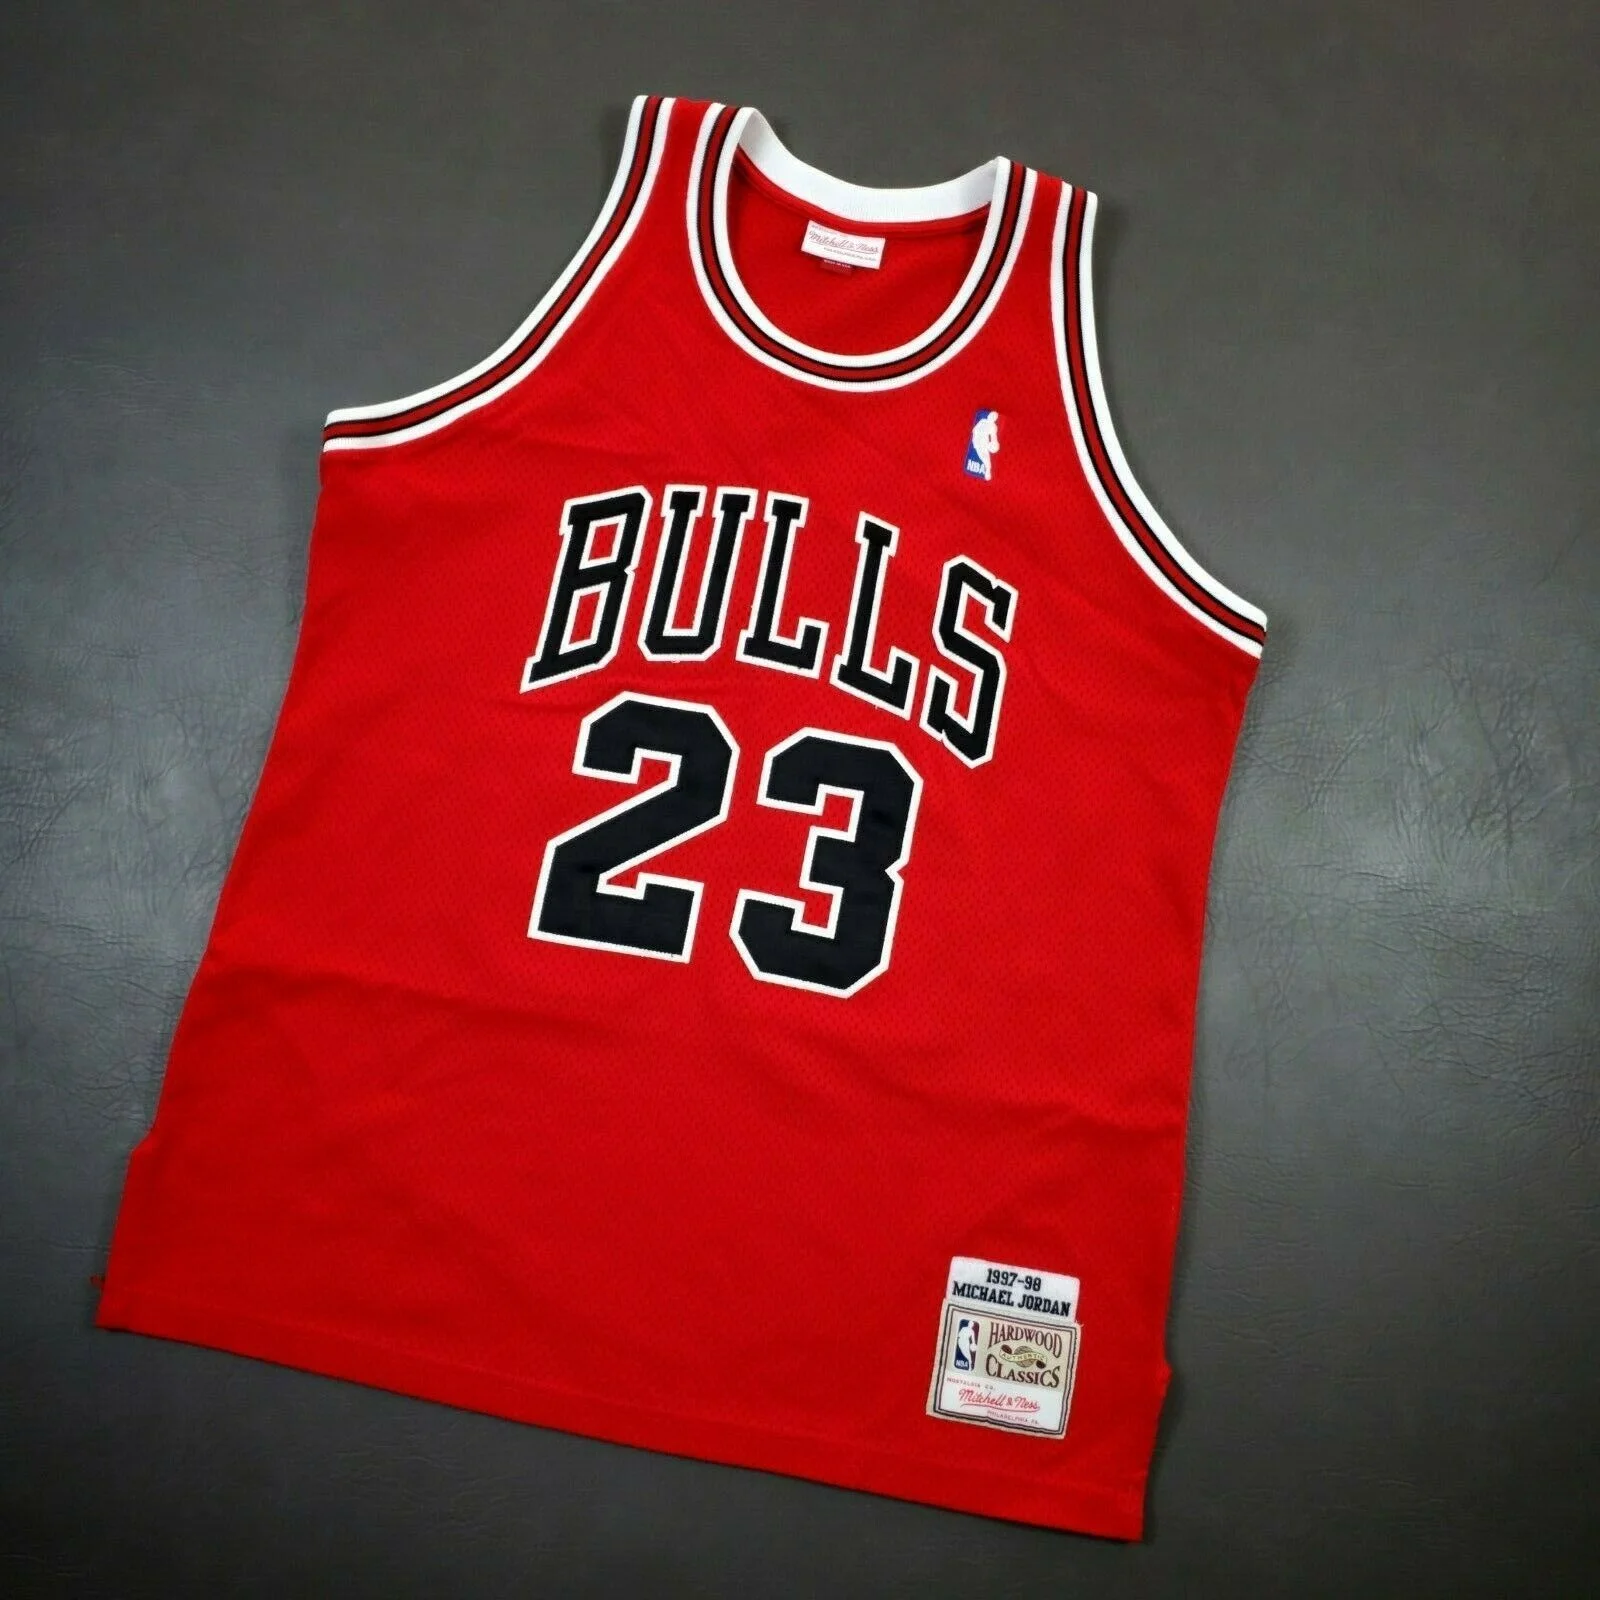 bulls 23 jersey